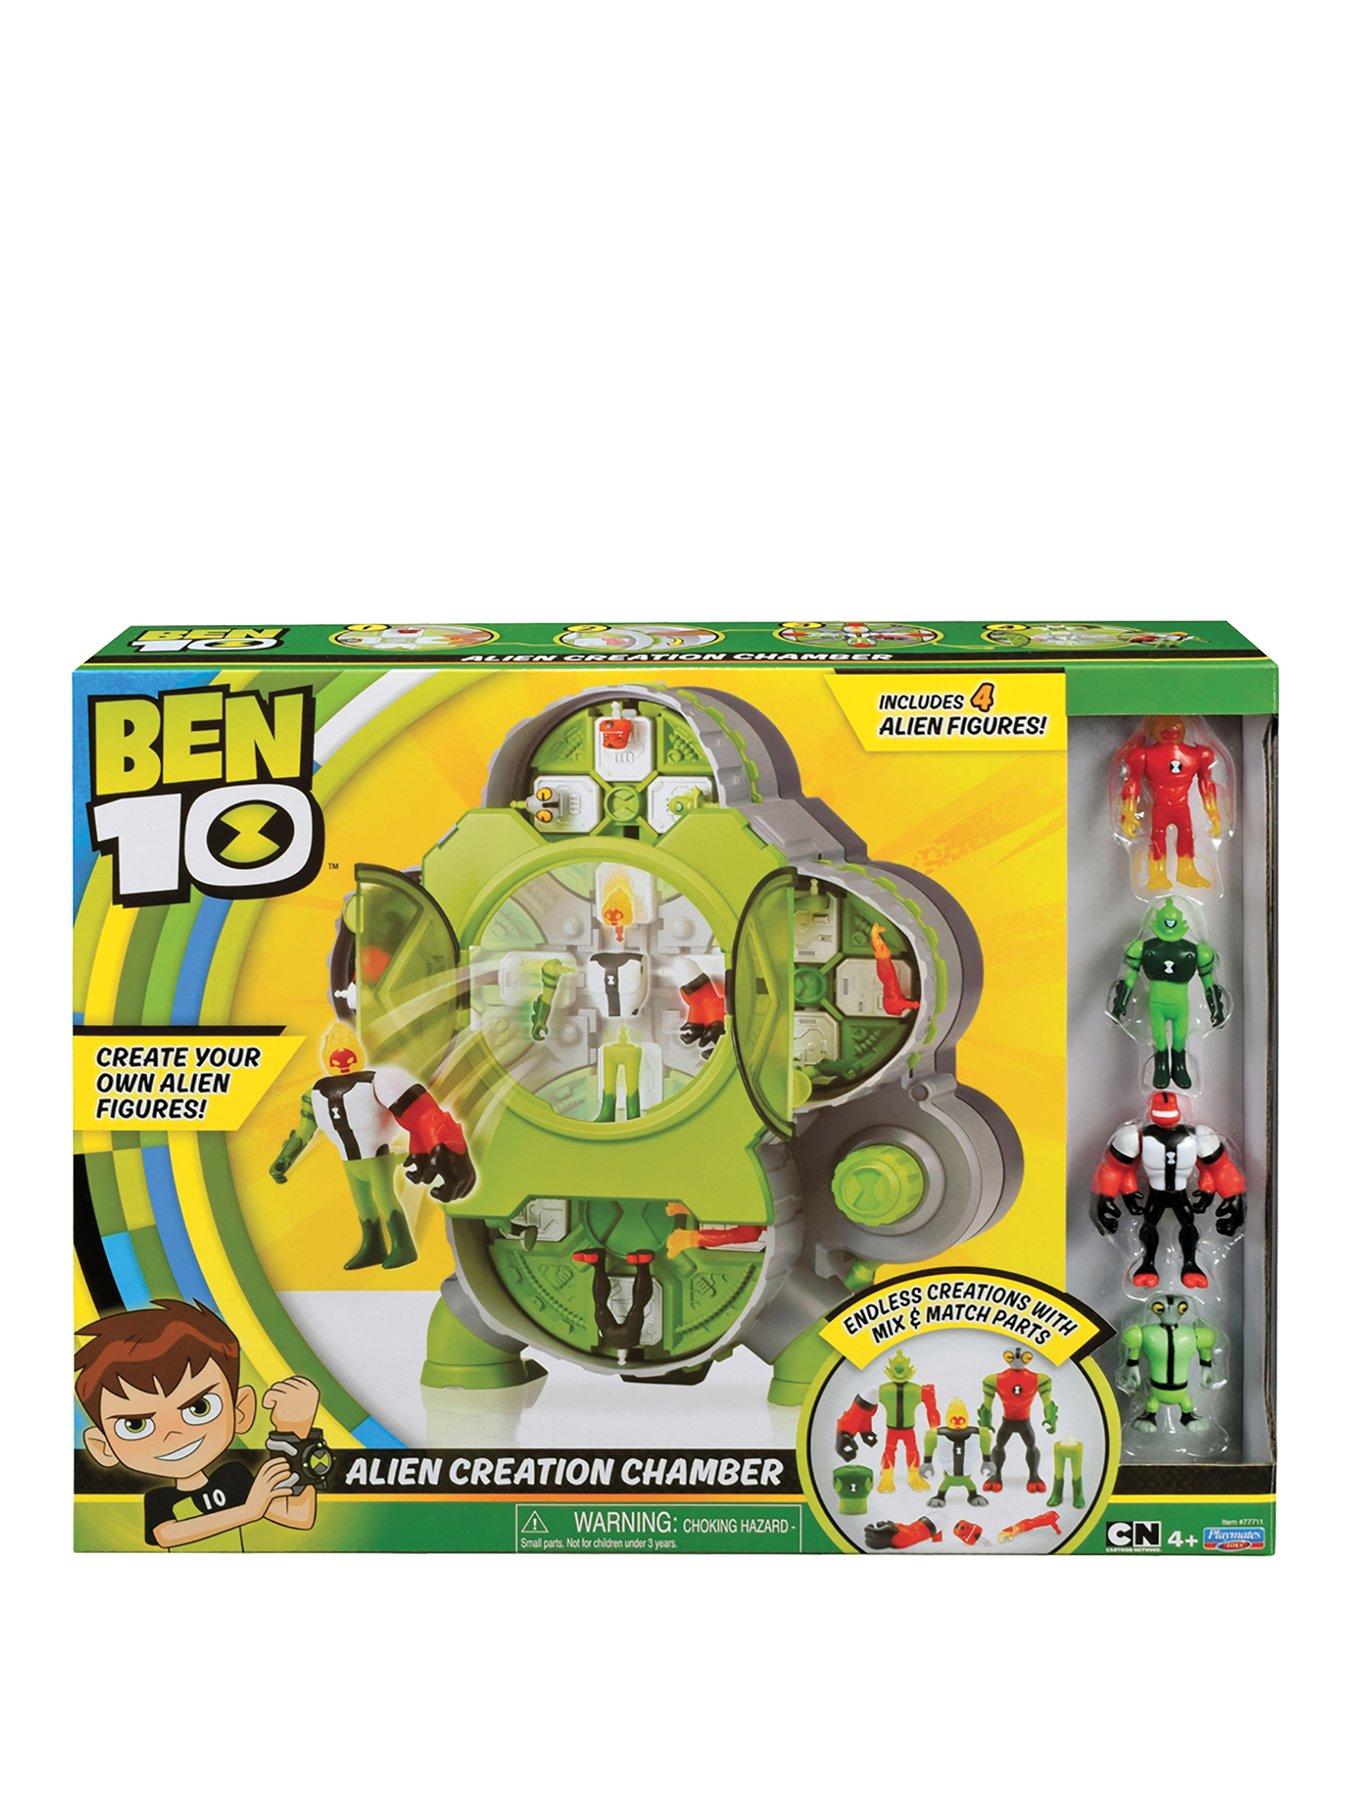 where can i buy ben 10 toys